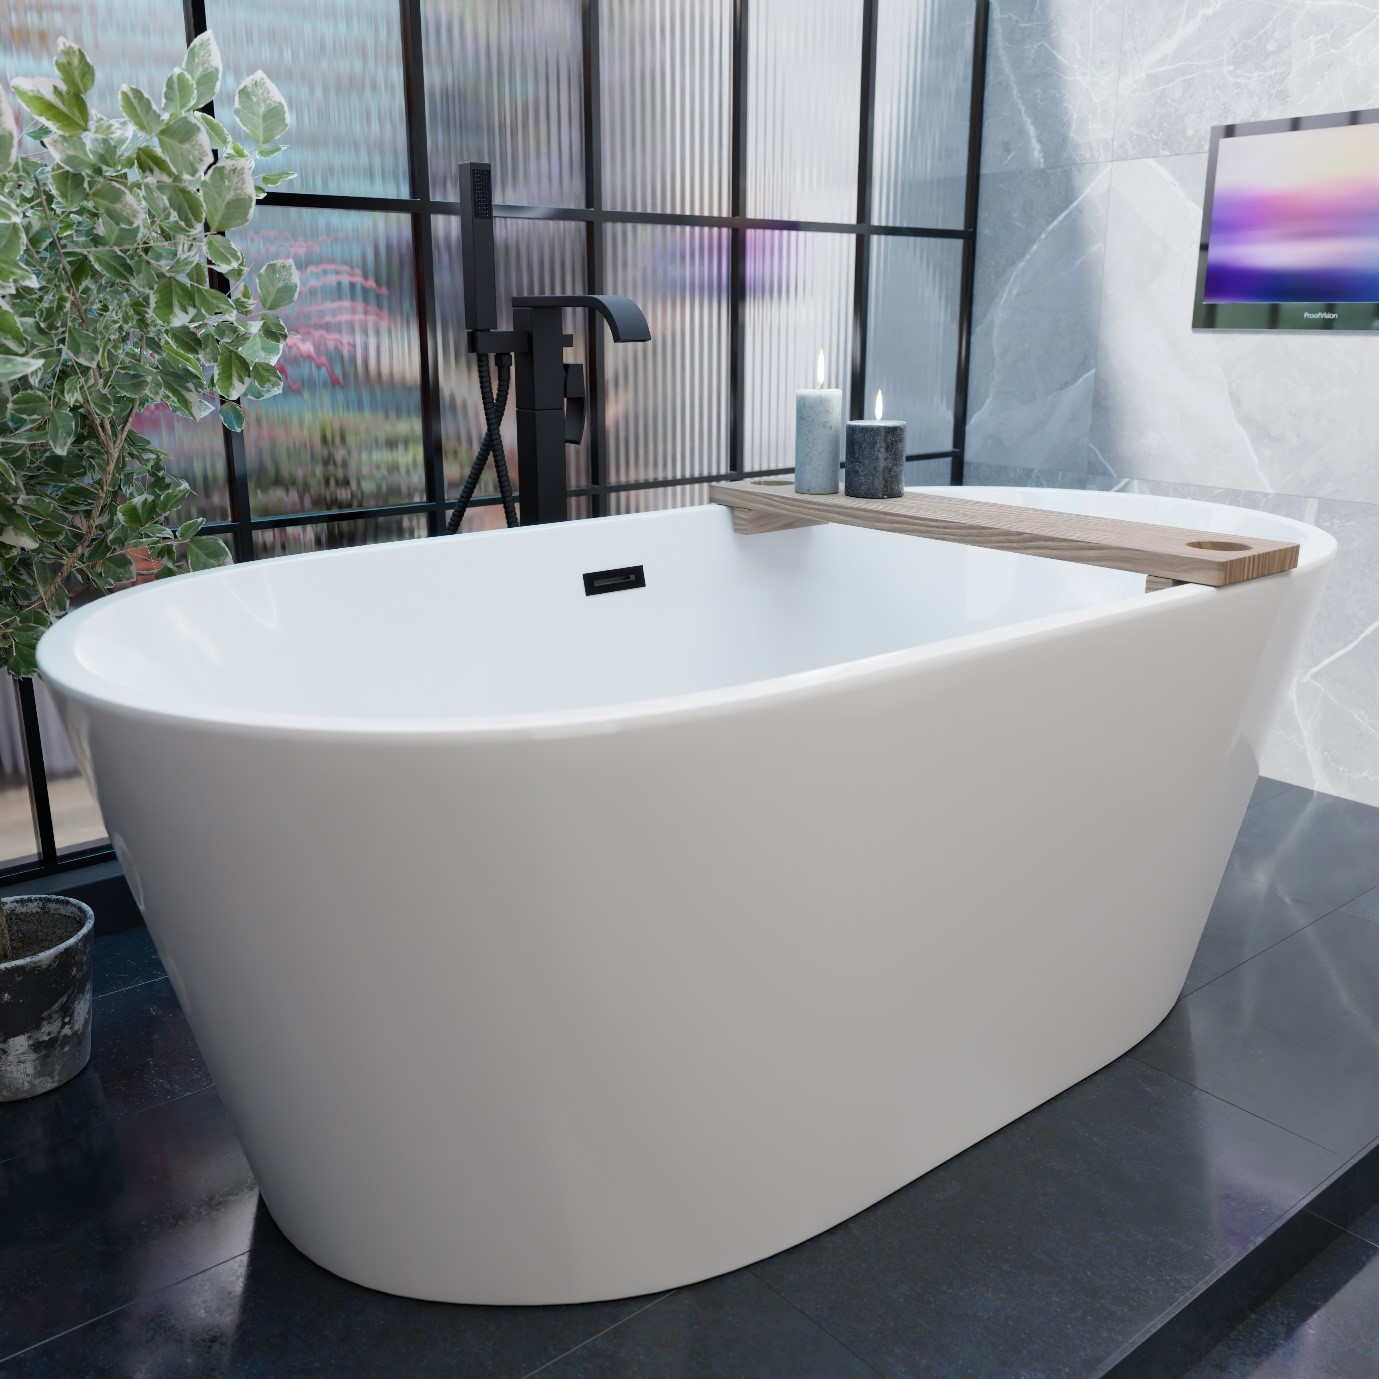 Freestanding bathtub with a floor standing matt black bath tap